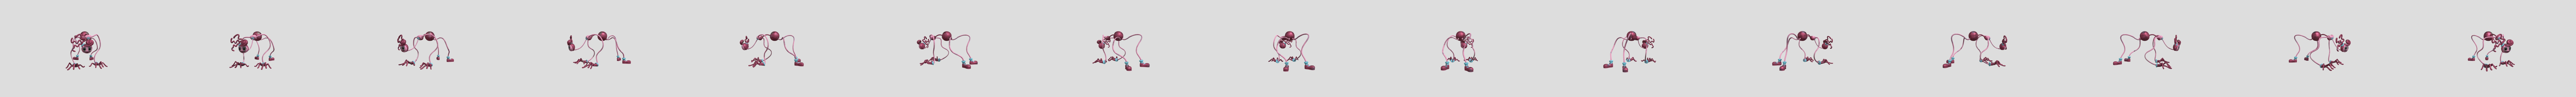 Poppy Playtime - Mommy Long Legs Death Animation - Download Free 3D model  by idkjaehh (@idkjaehhi) [5b3ef1f]